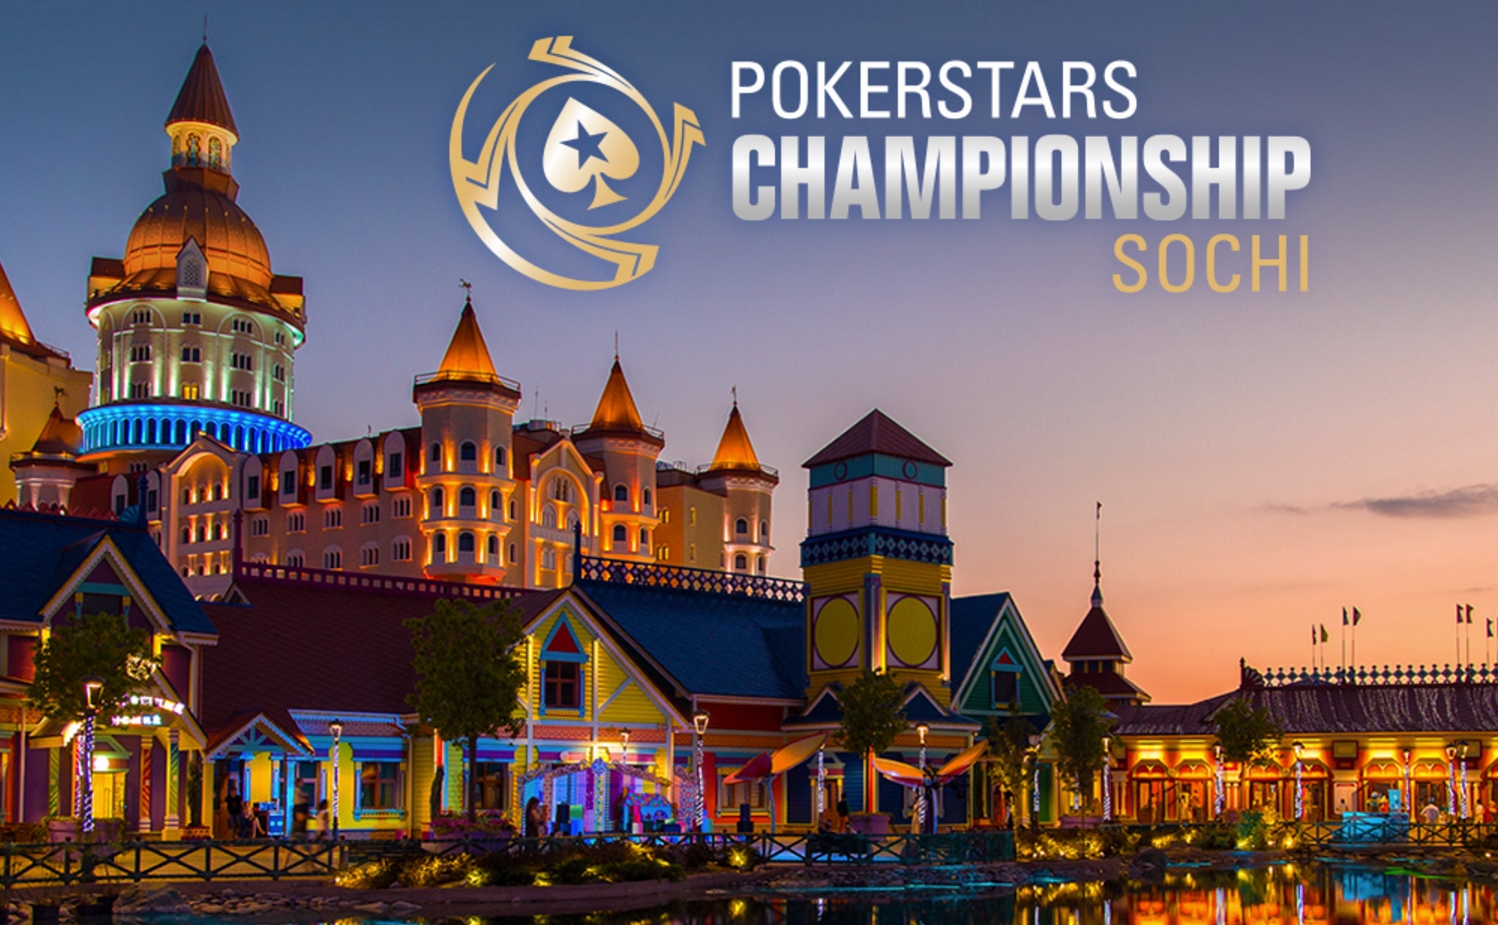 PokerStars Championship Sochi! $2.5 million guaranteed in Main Event!